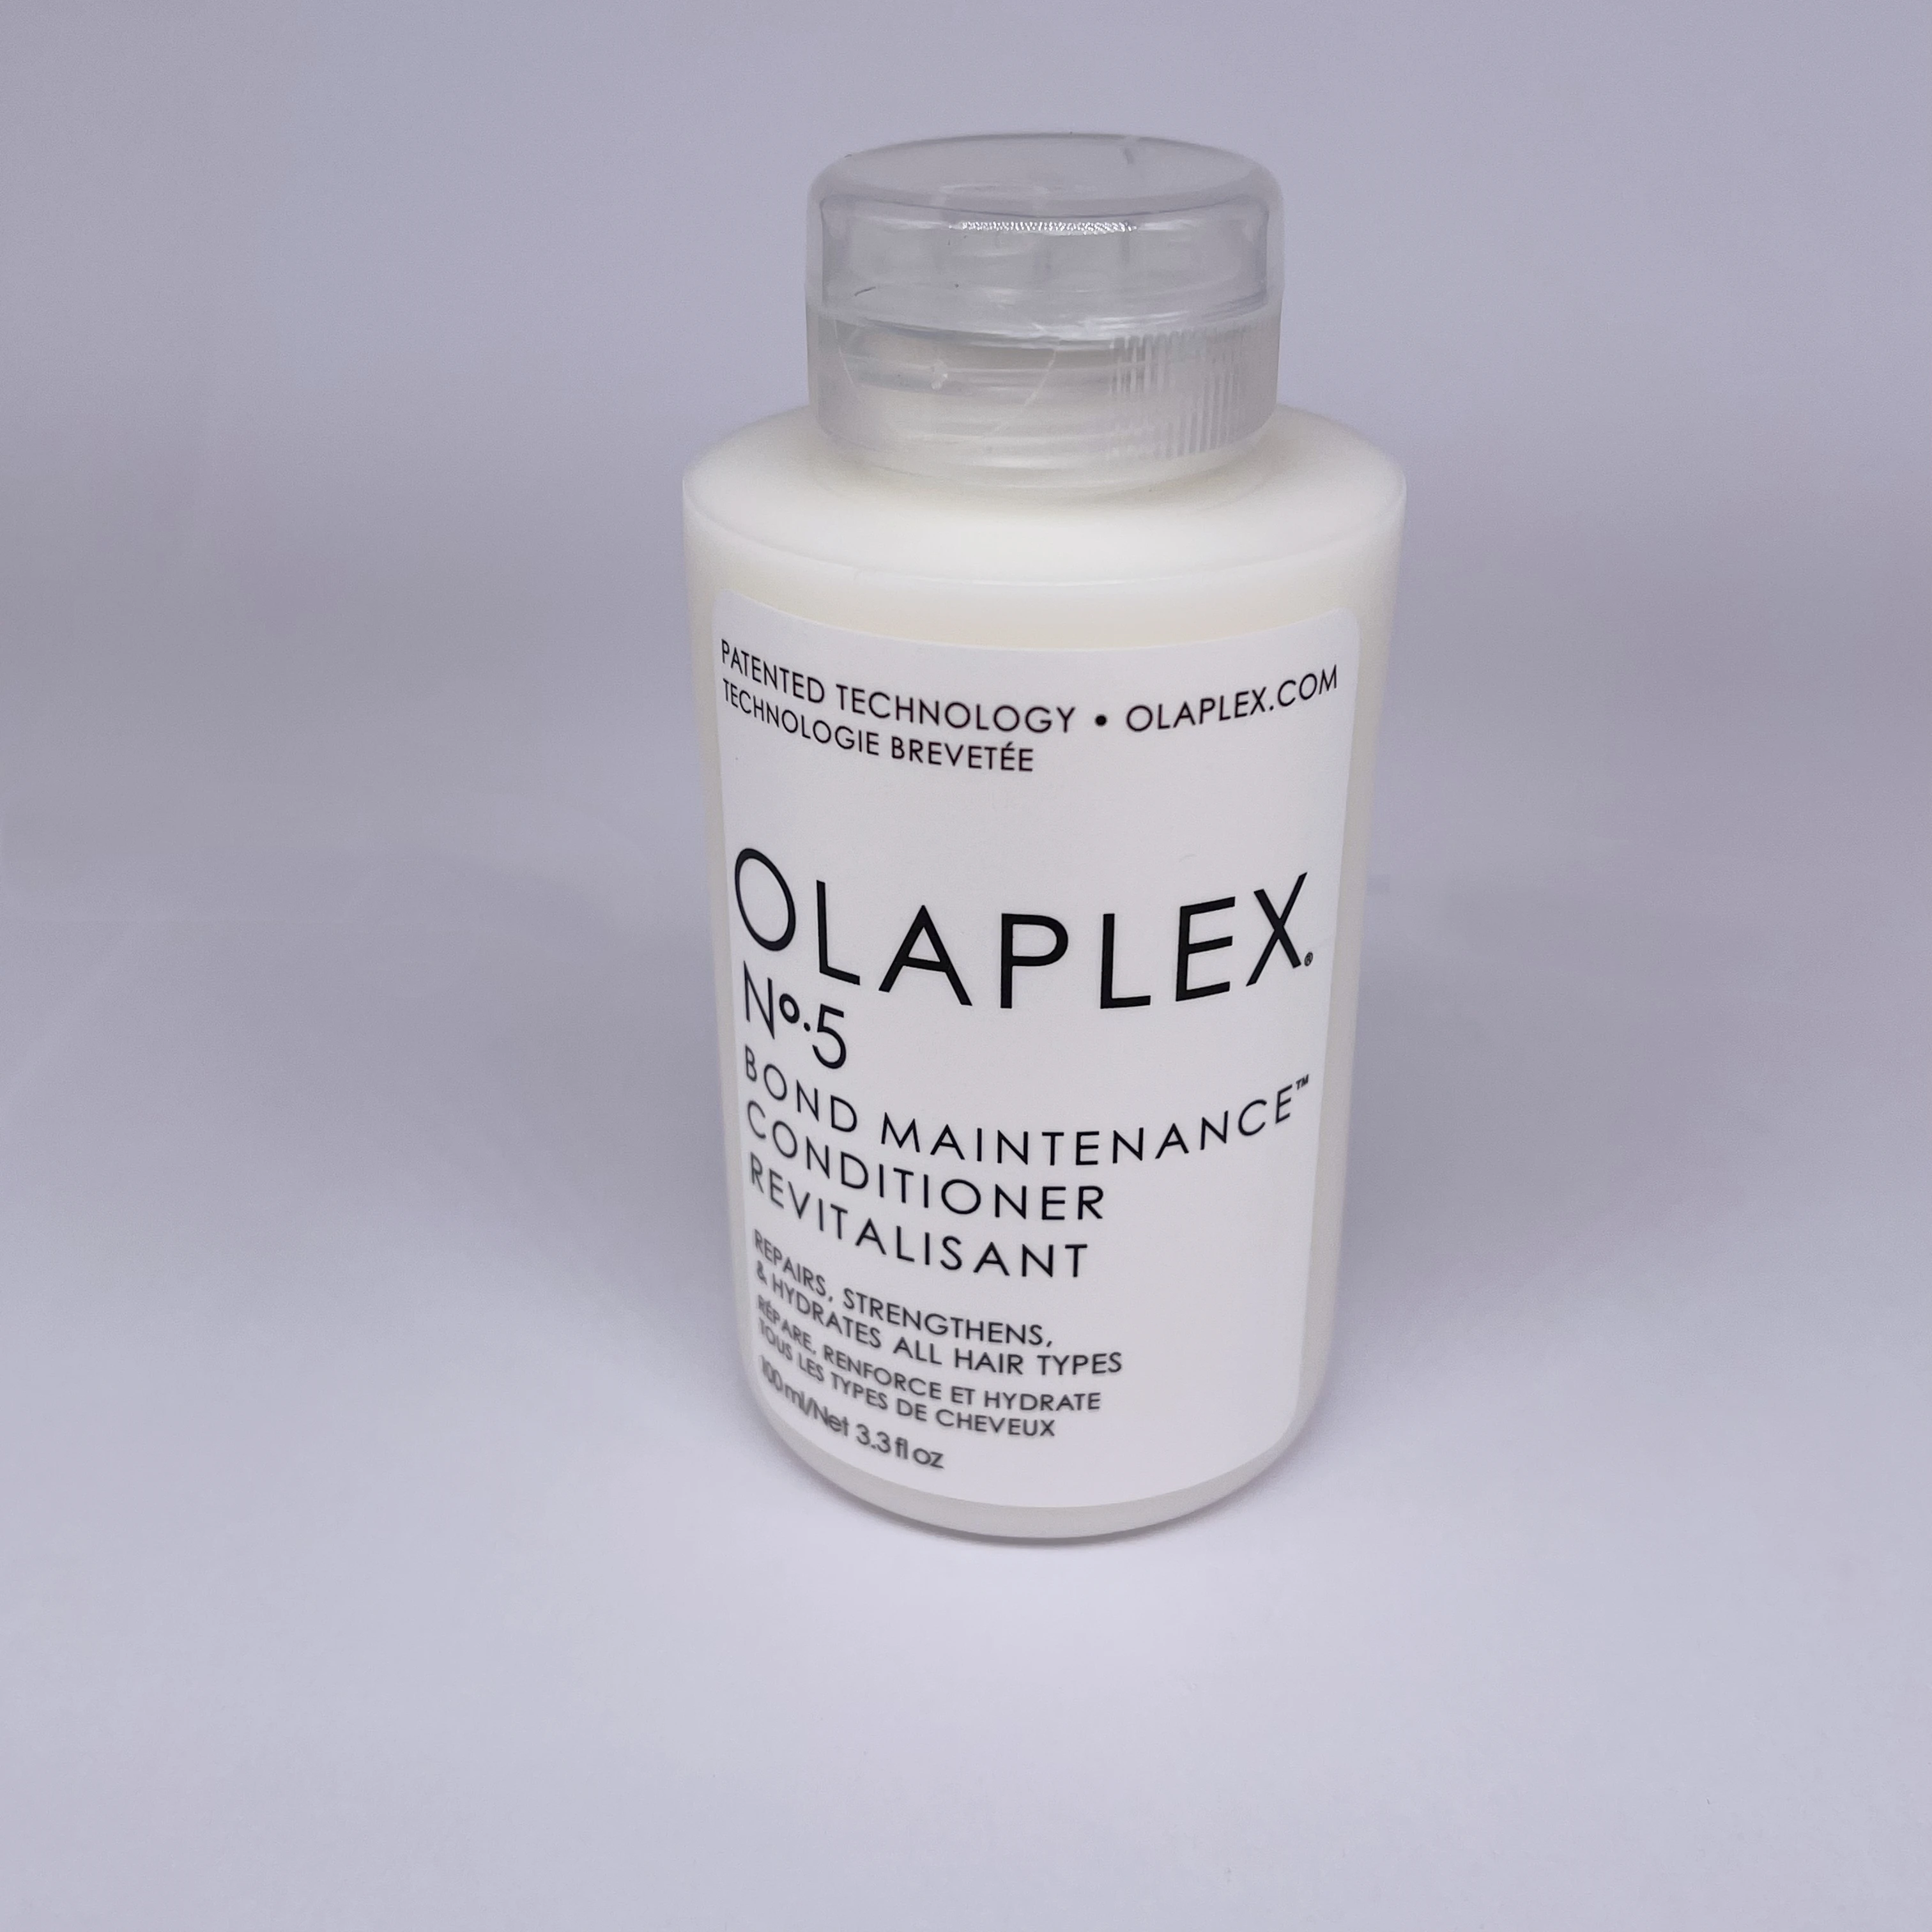 

Olaplex 100ml N.5 Bond Maintenance Conditioner Revitalisant Conditioner Softening Conditioner Deep Repairing Hair Improves Frizz